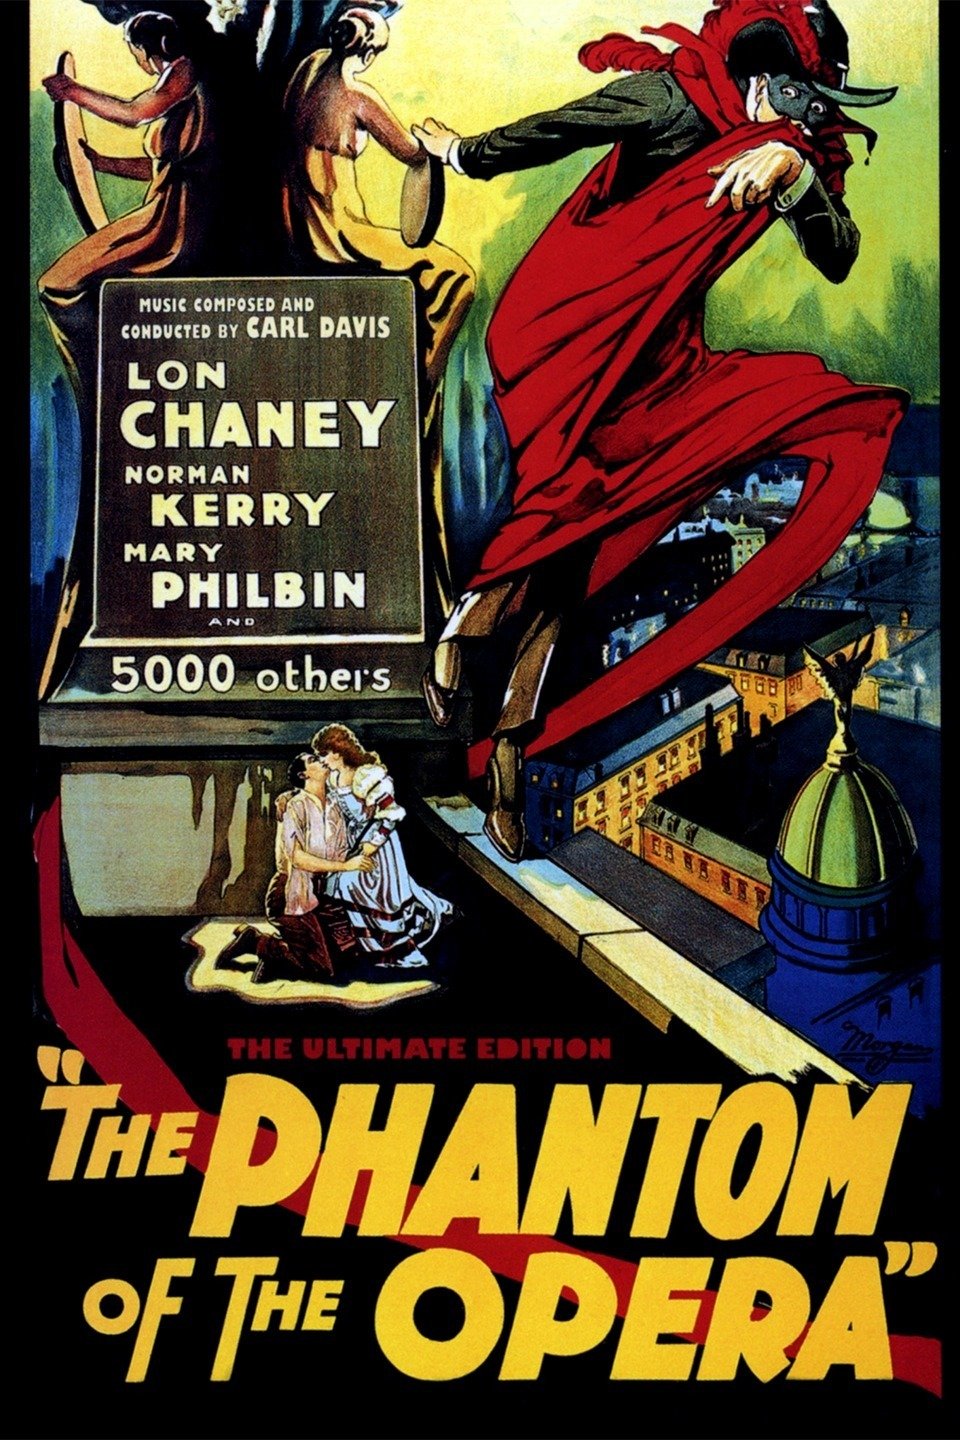 phantom of the opera movie meaning